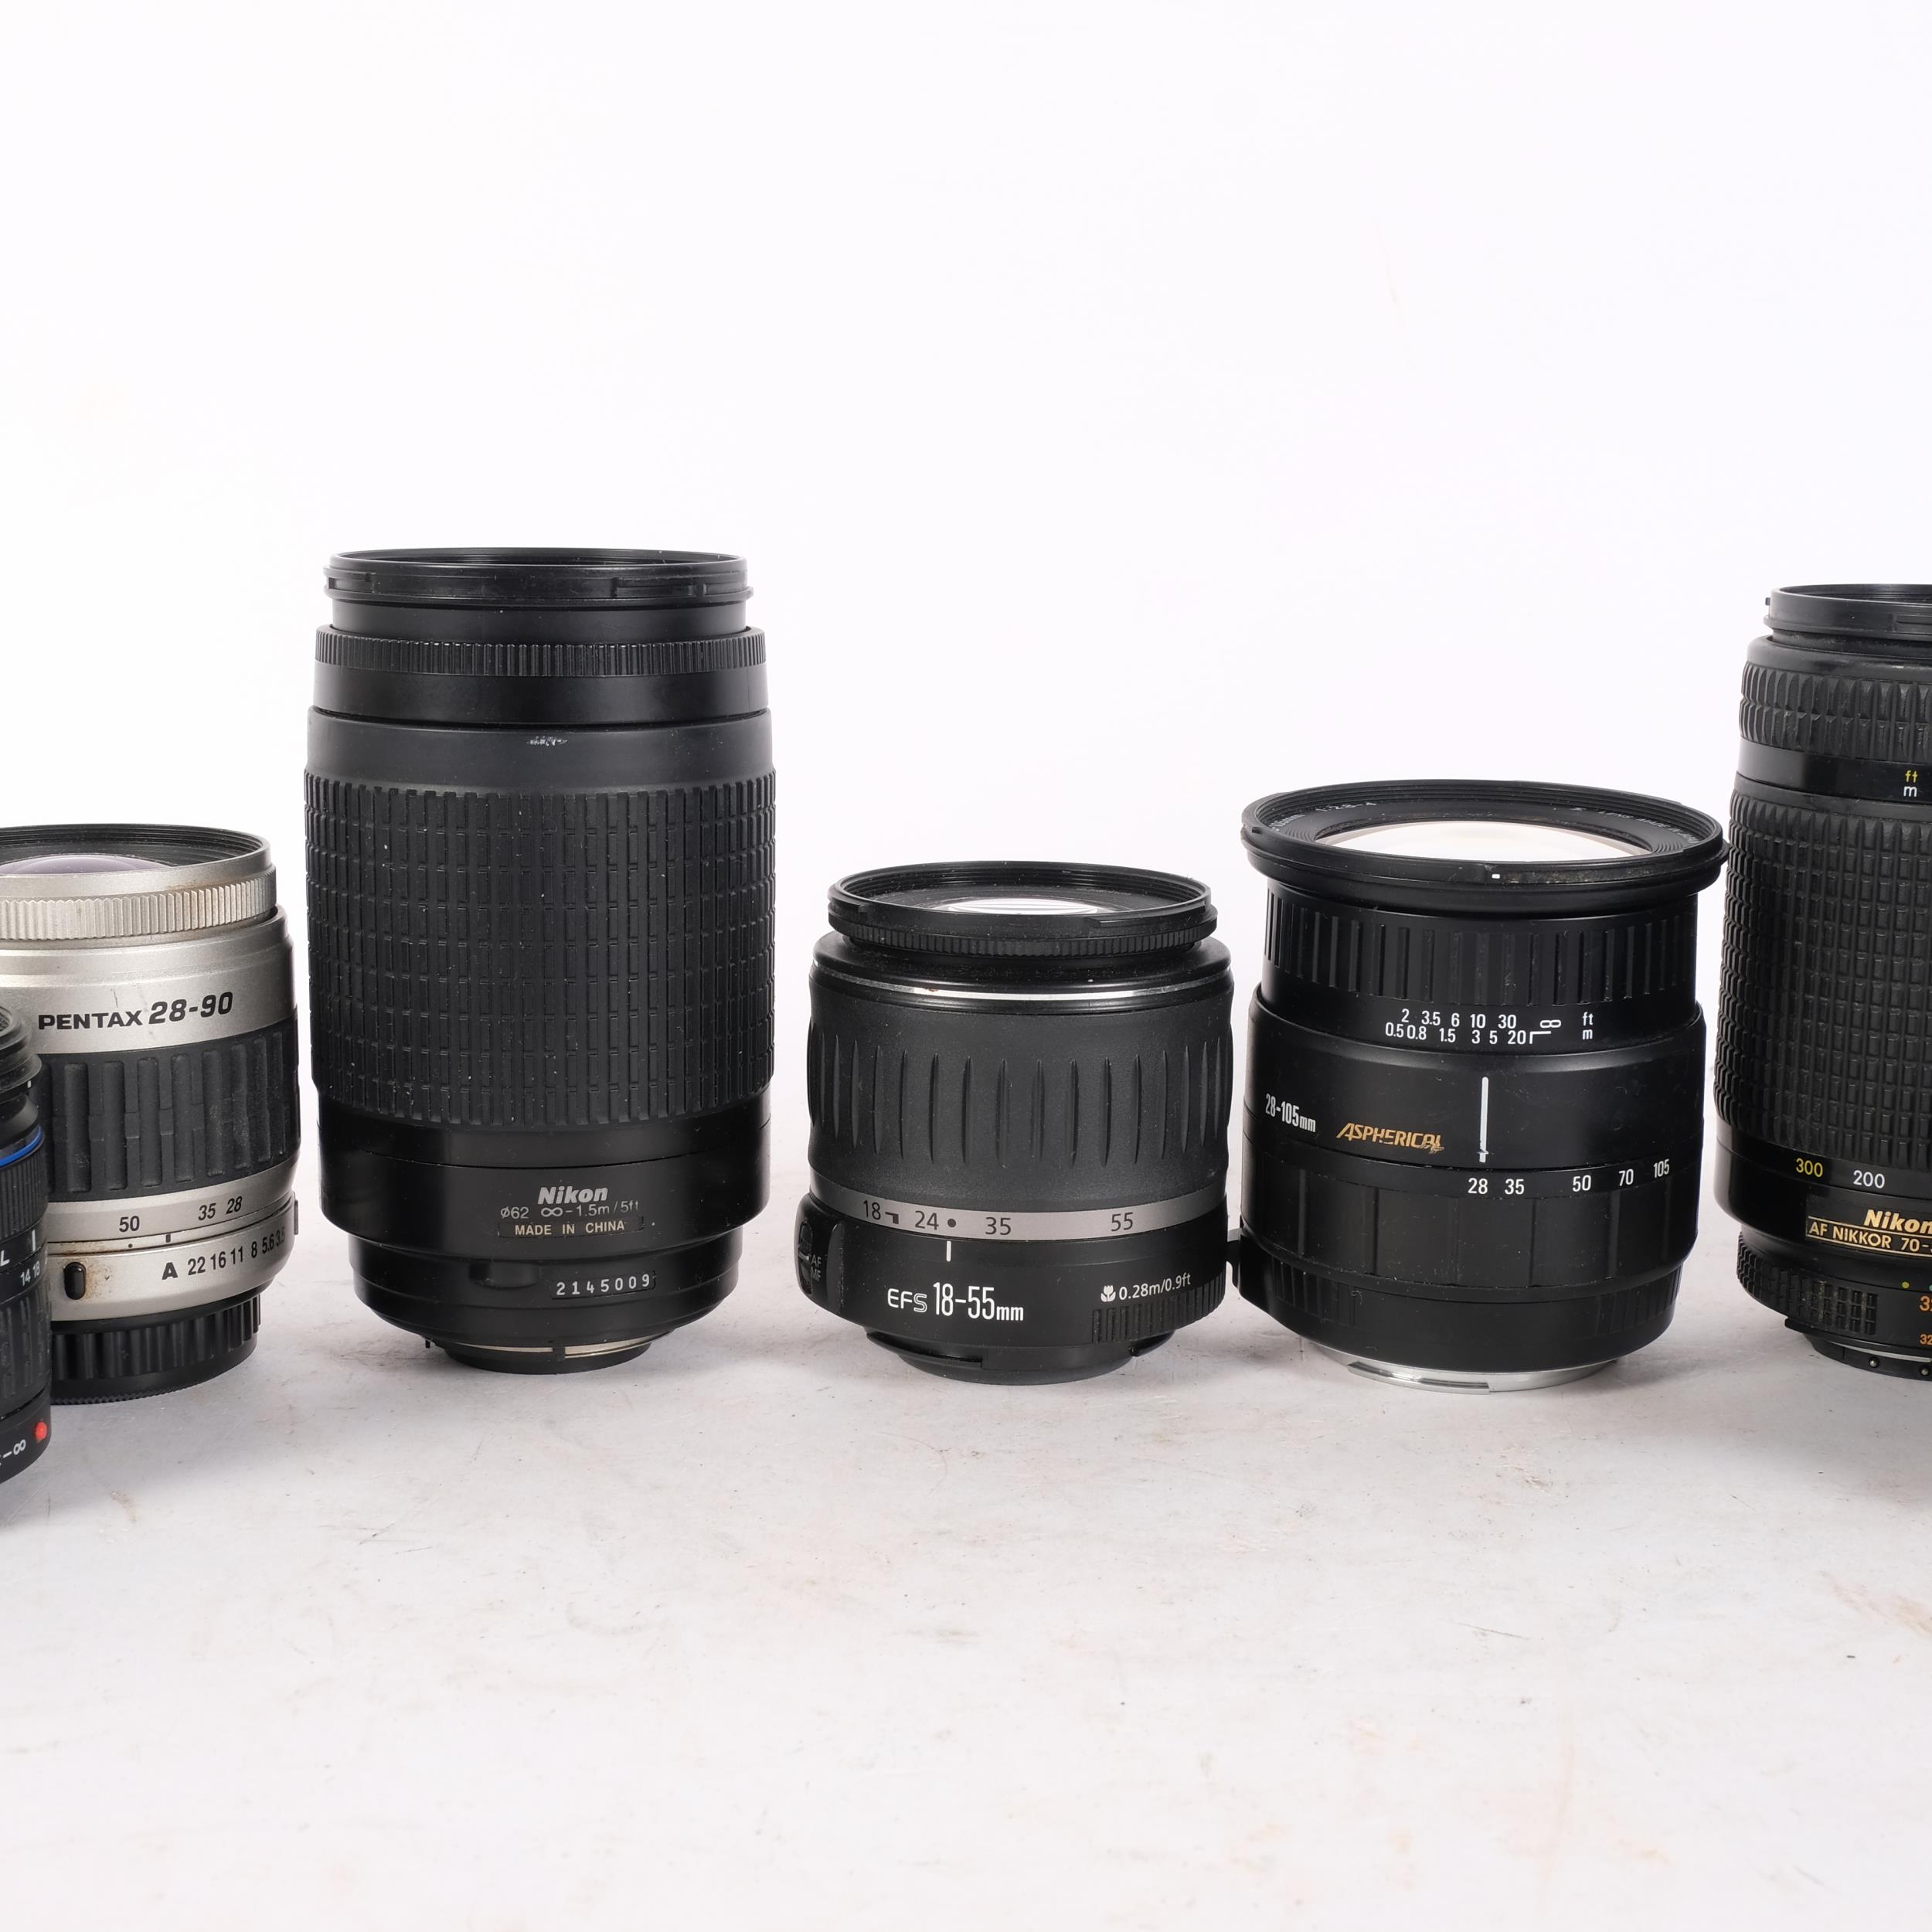 A quantity of Vintage camera lenses, various brands including Nikon, Nikkor, Sigma, Pentax, Olympus, - Image 2 of 2